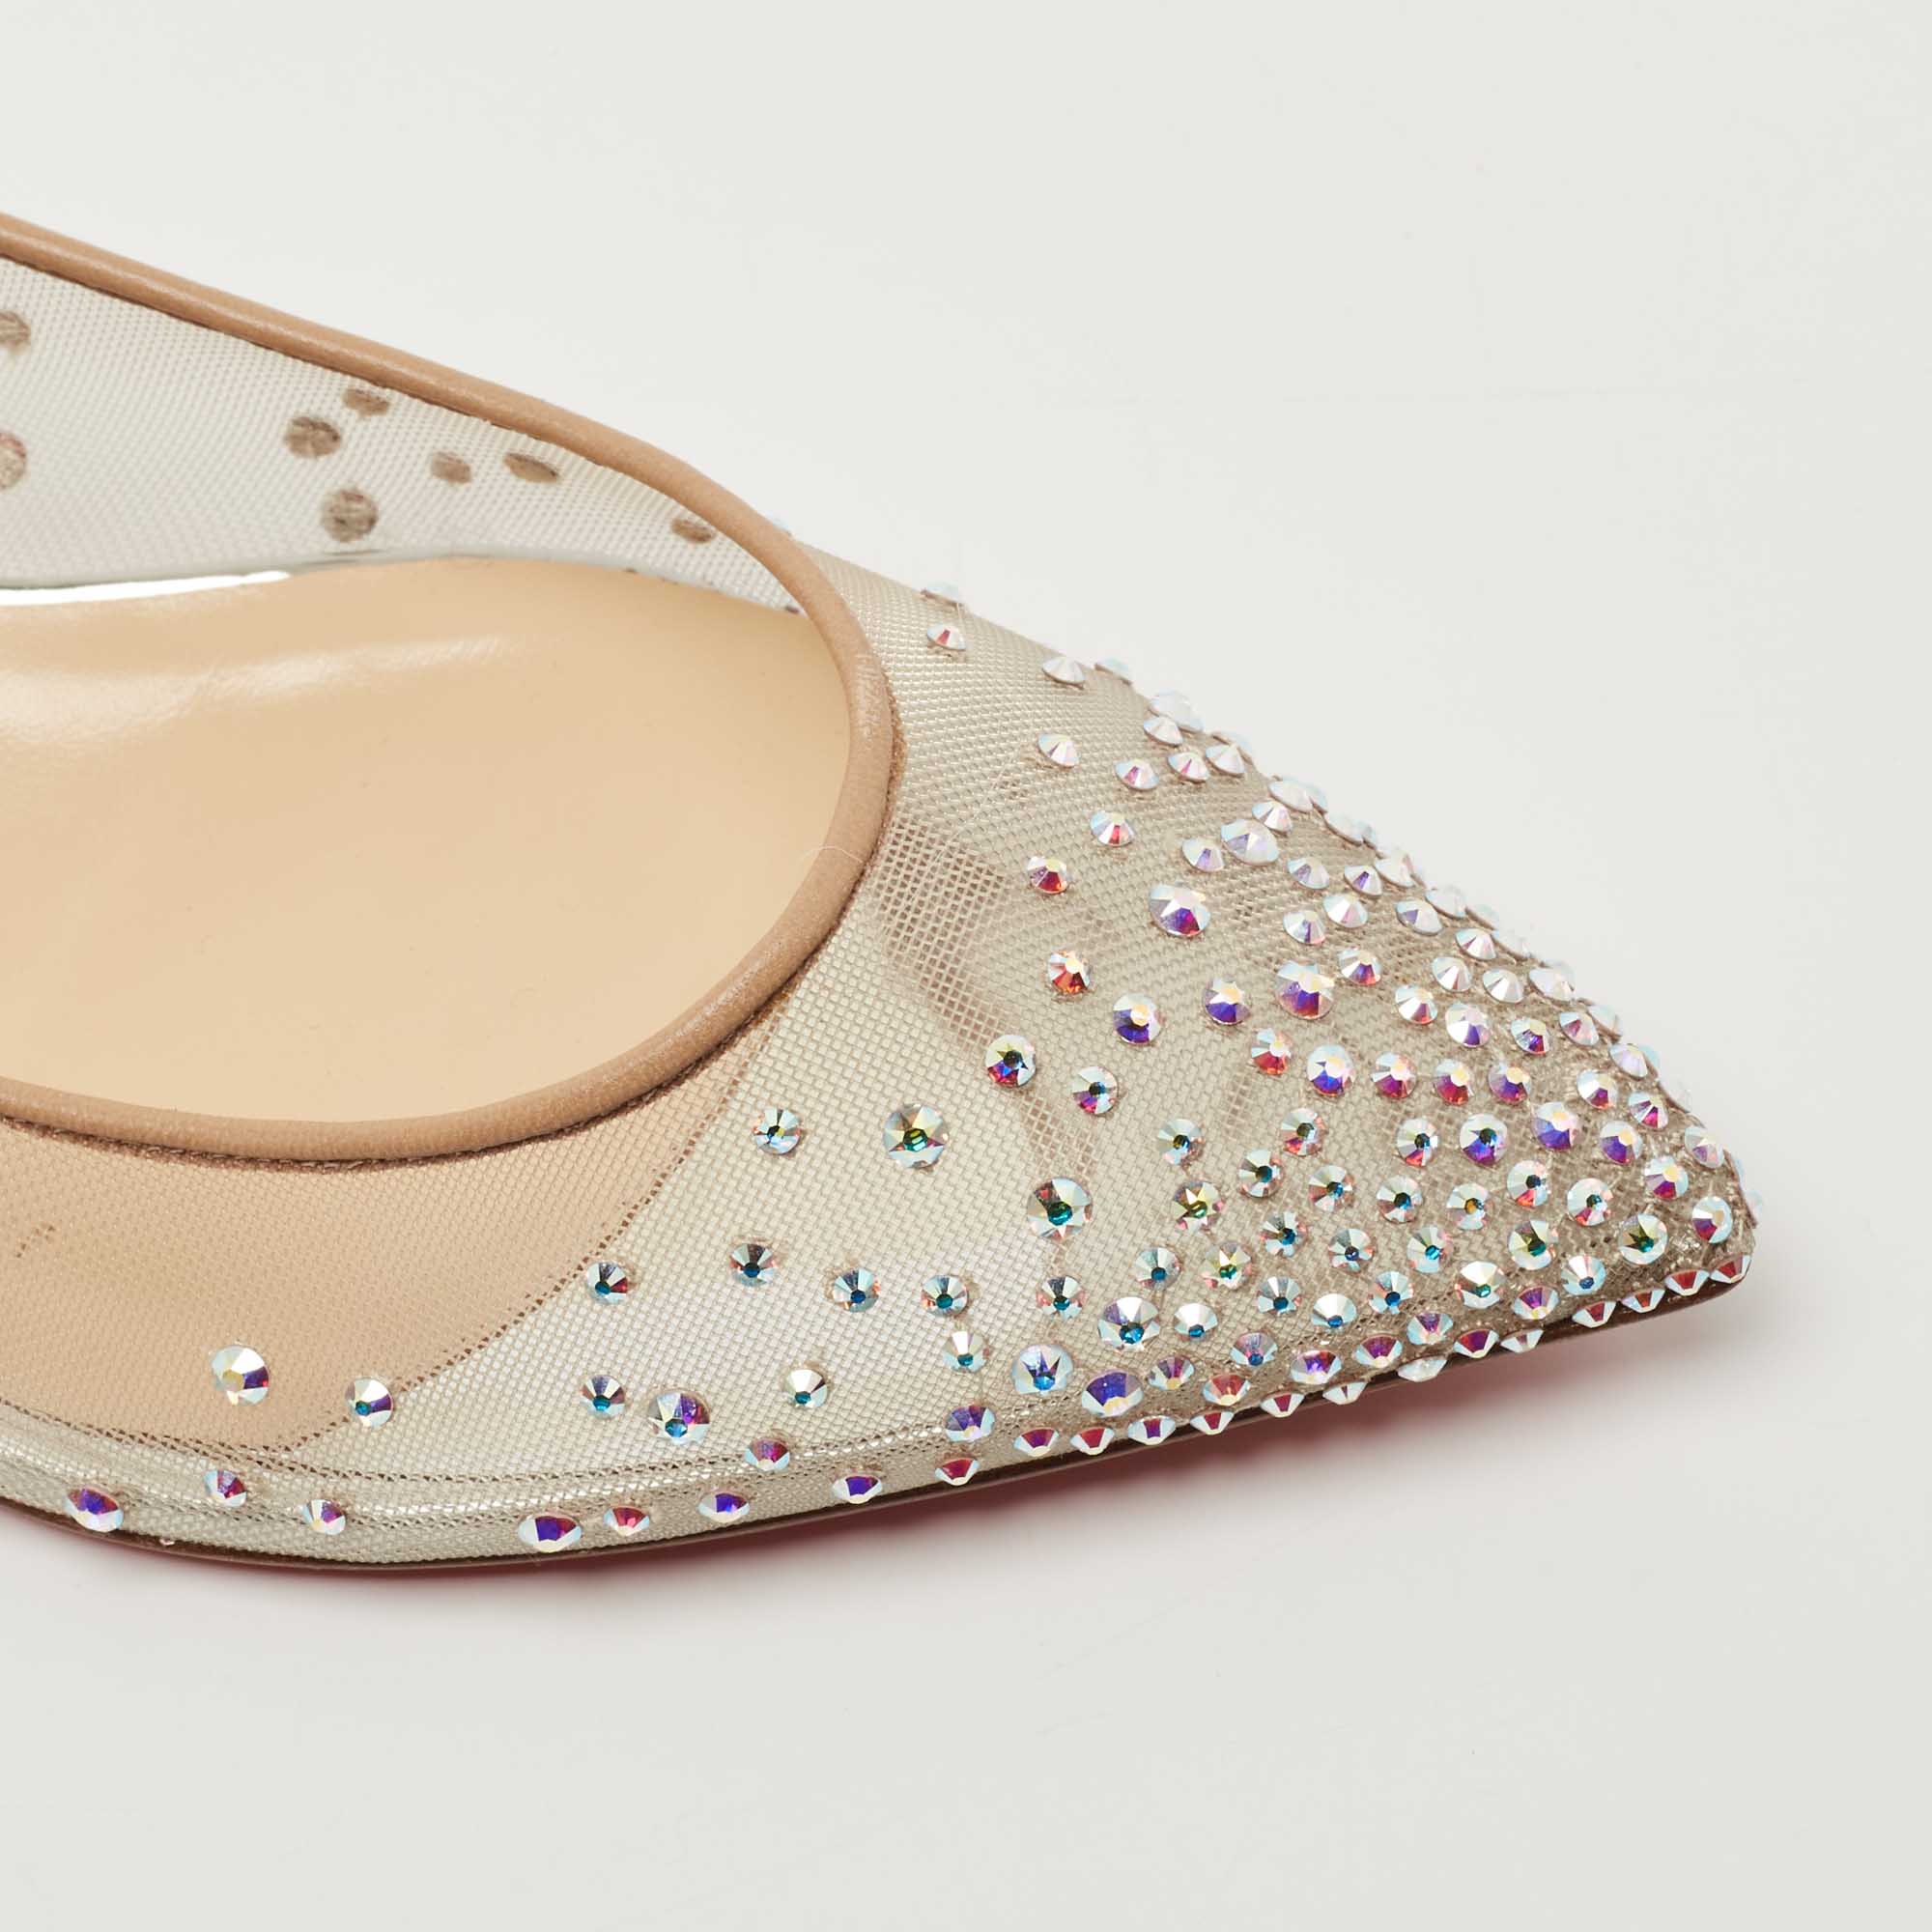 Christian Louboutin Metallic Glitter and Leather Follies Strass Ballet Flats Size 36.5